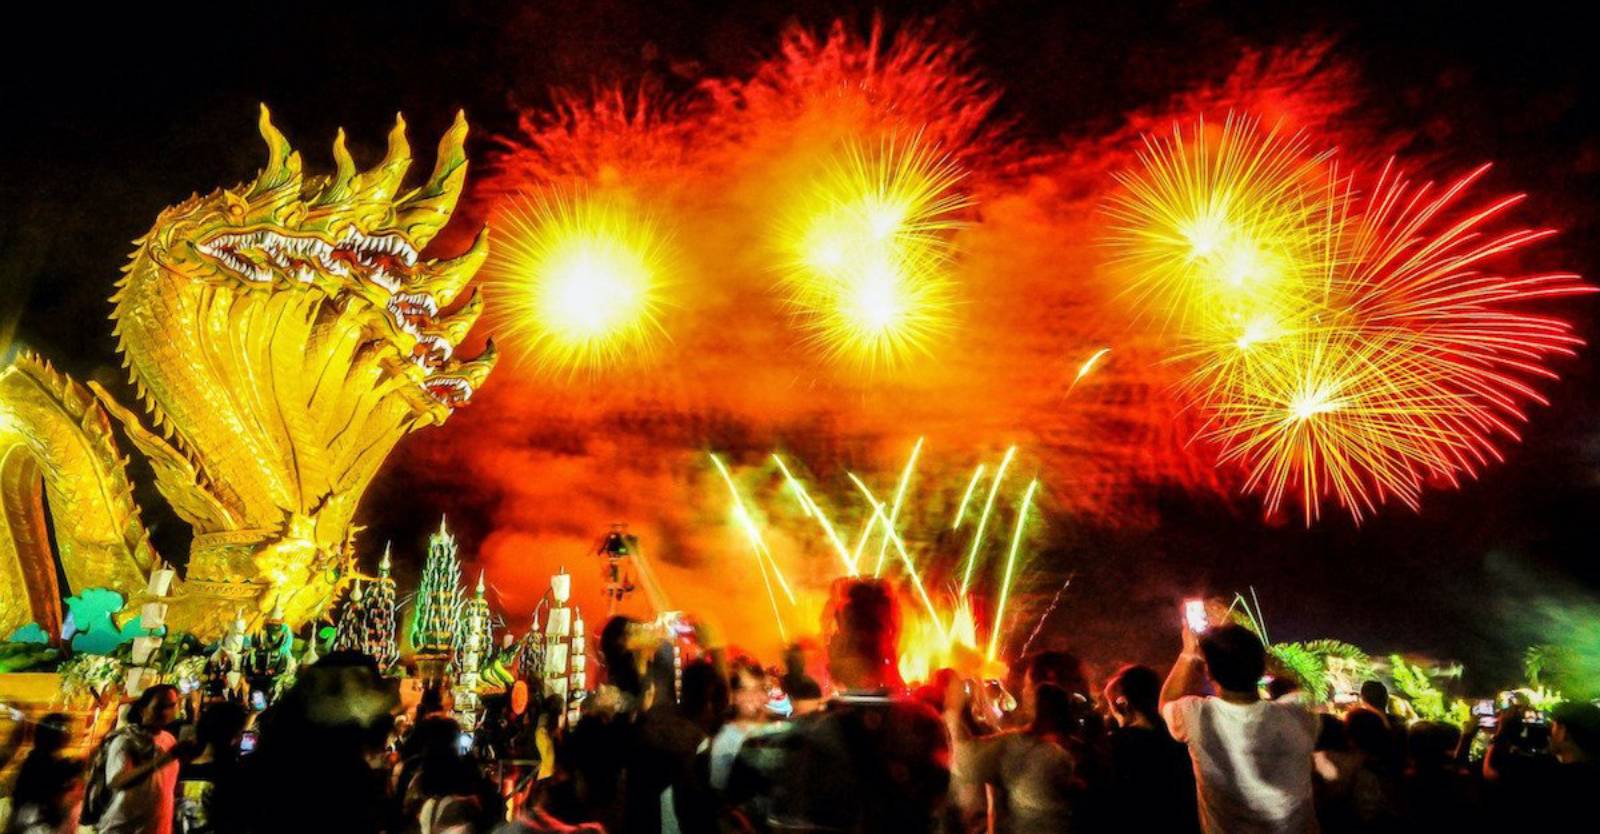 The Naga Fireball Festival